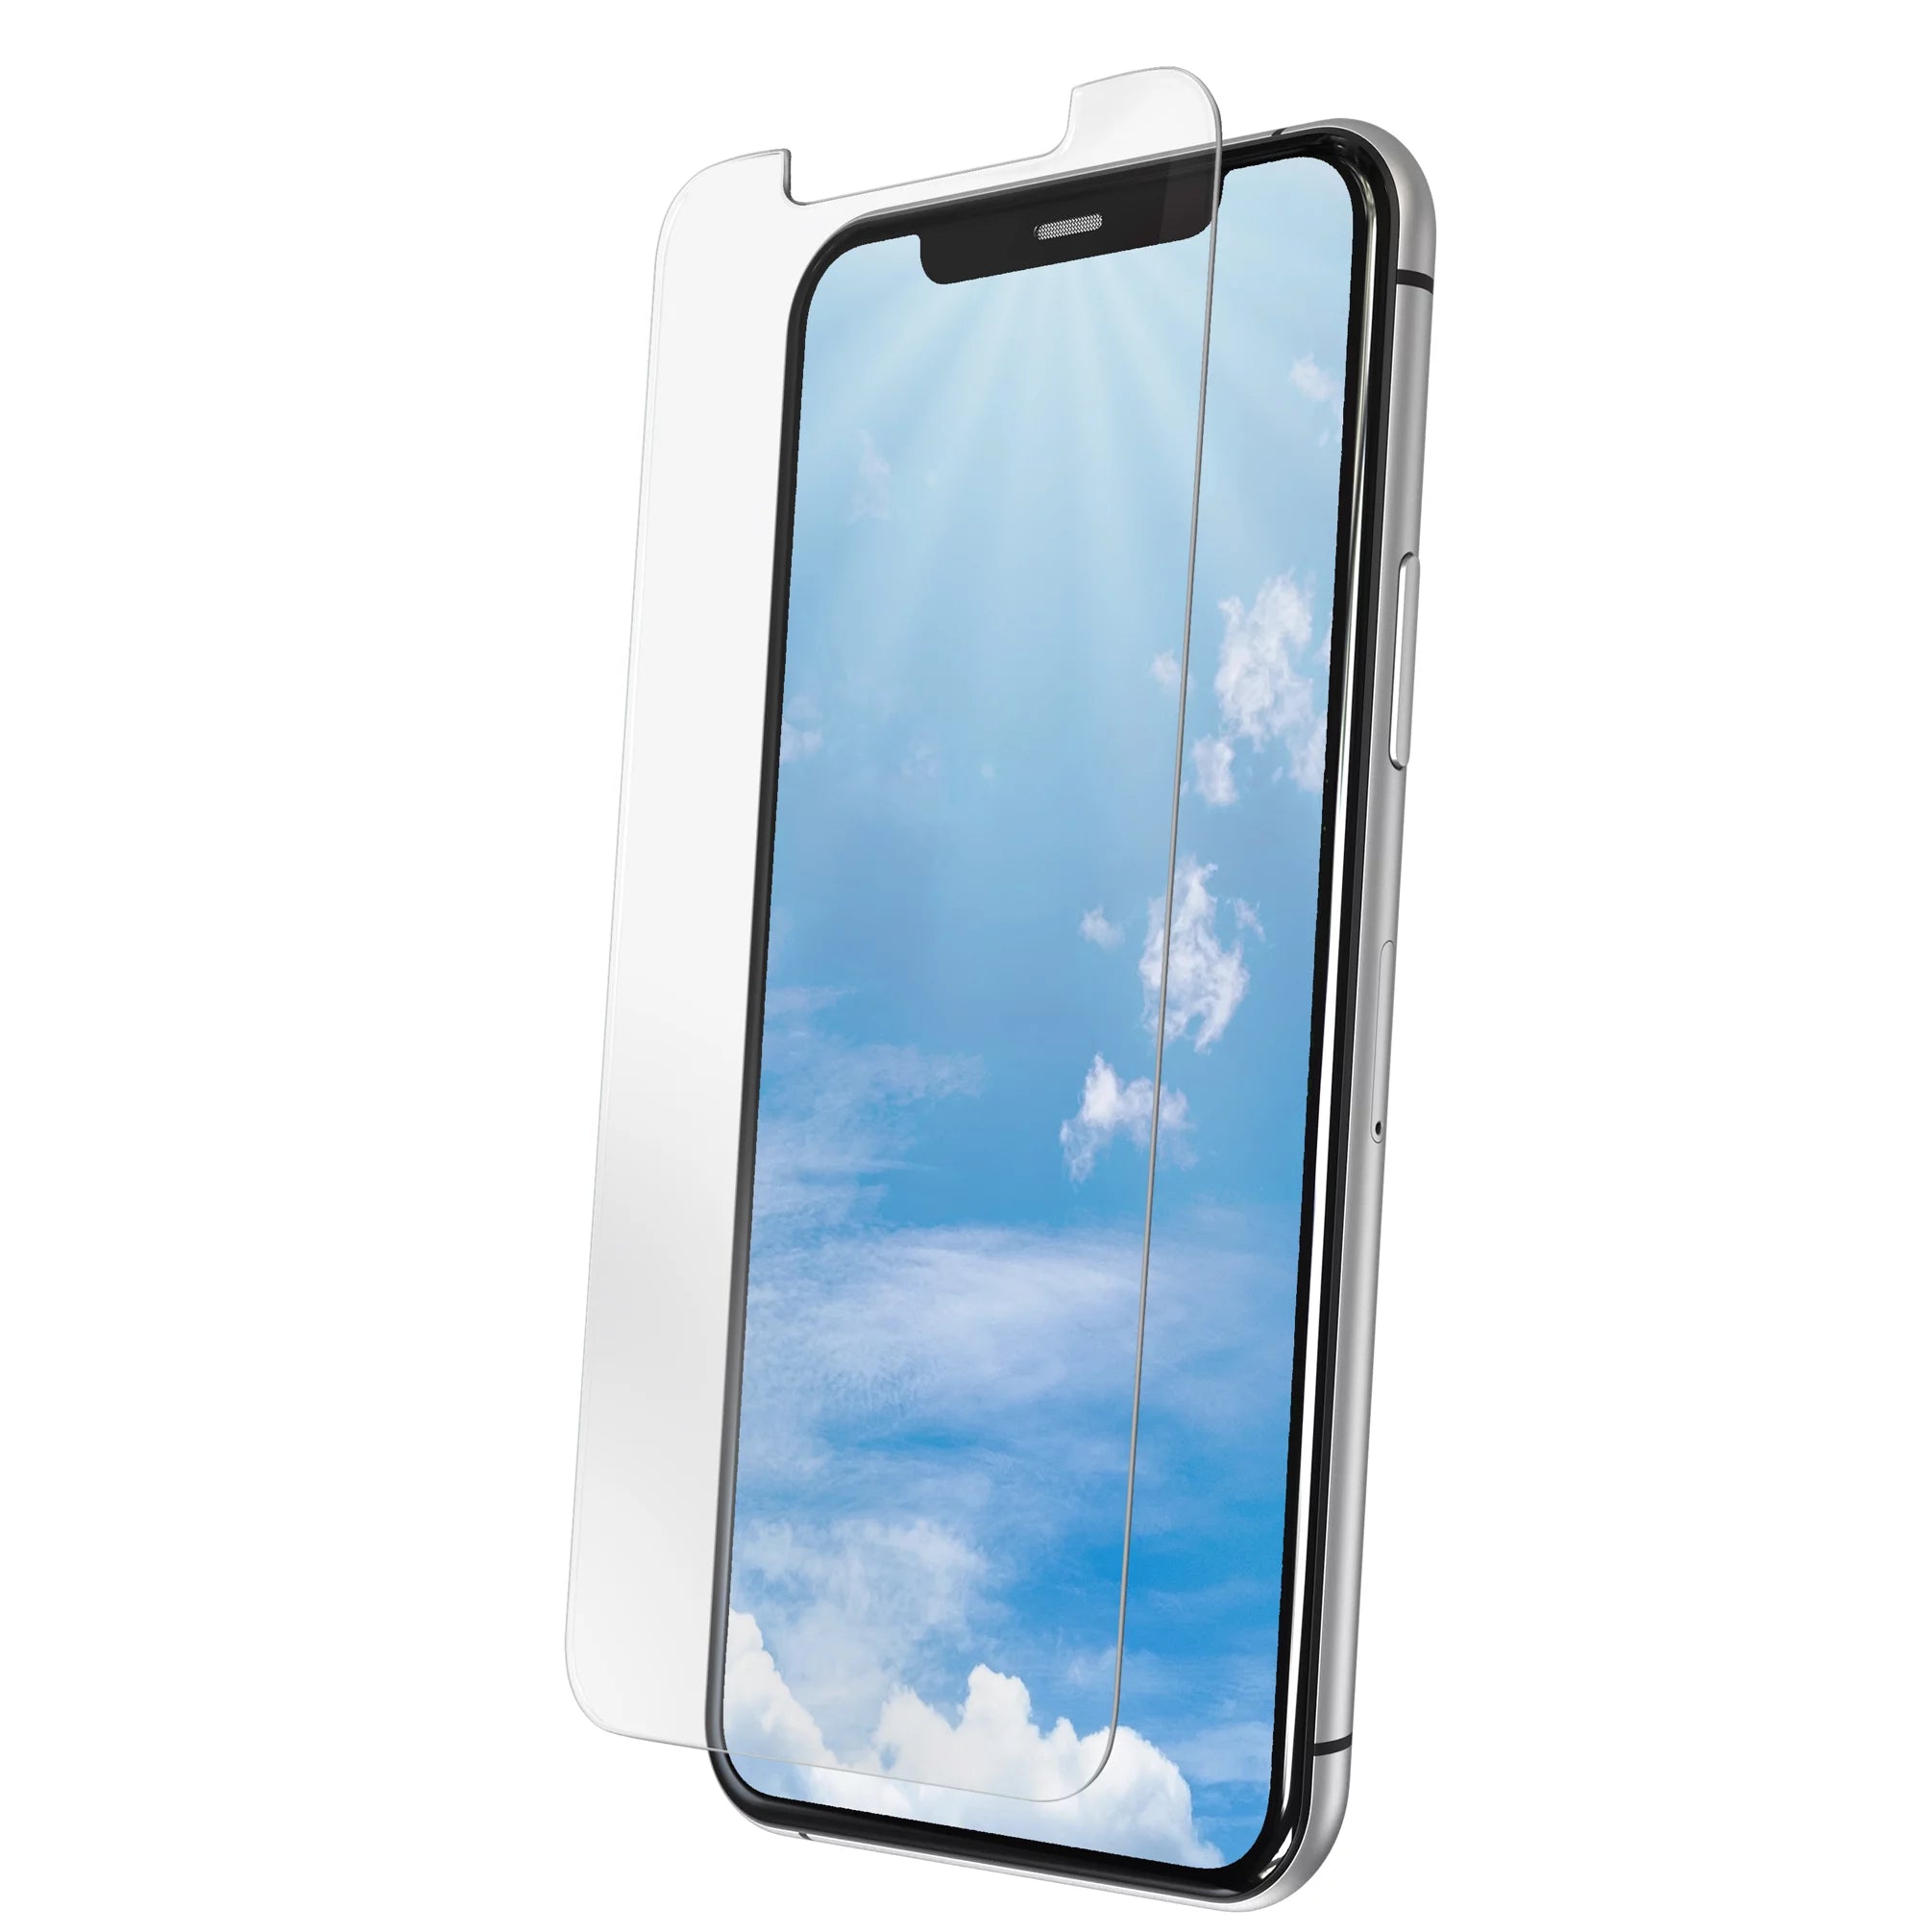 Regular Temper Glass For Iphone 11 Pro Max 6.5"